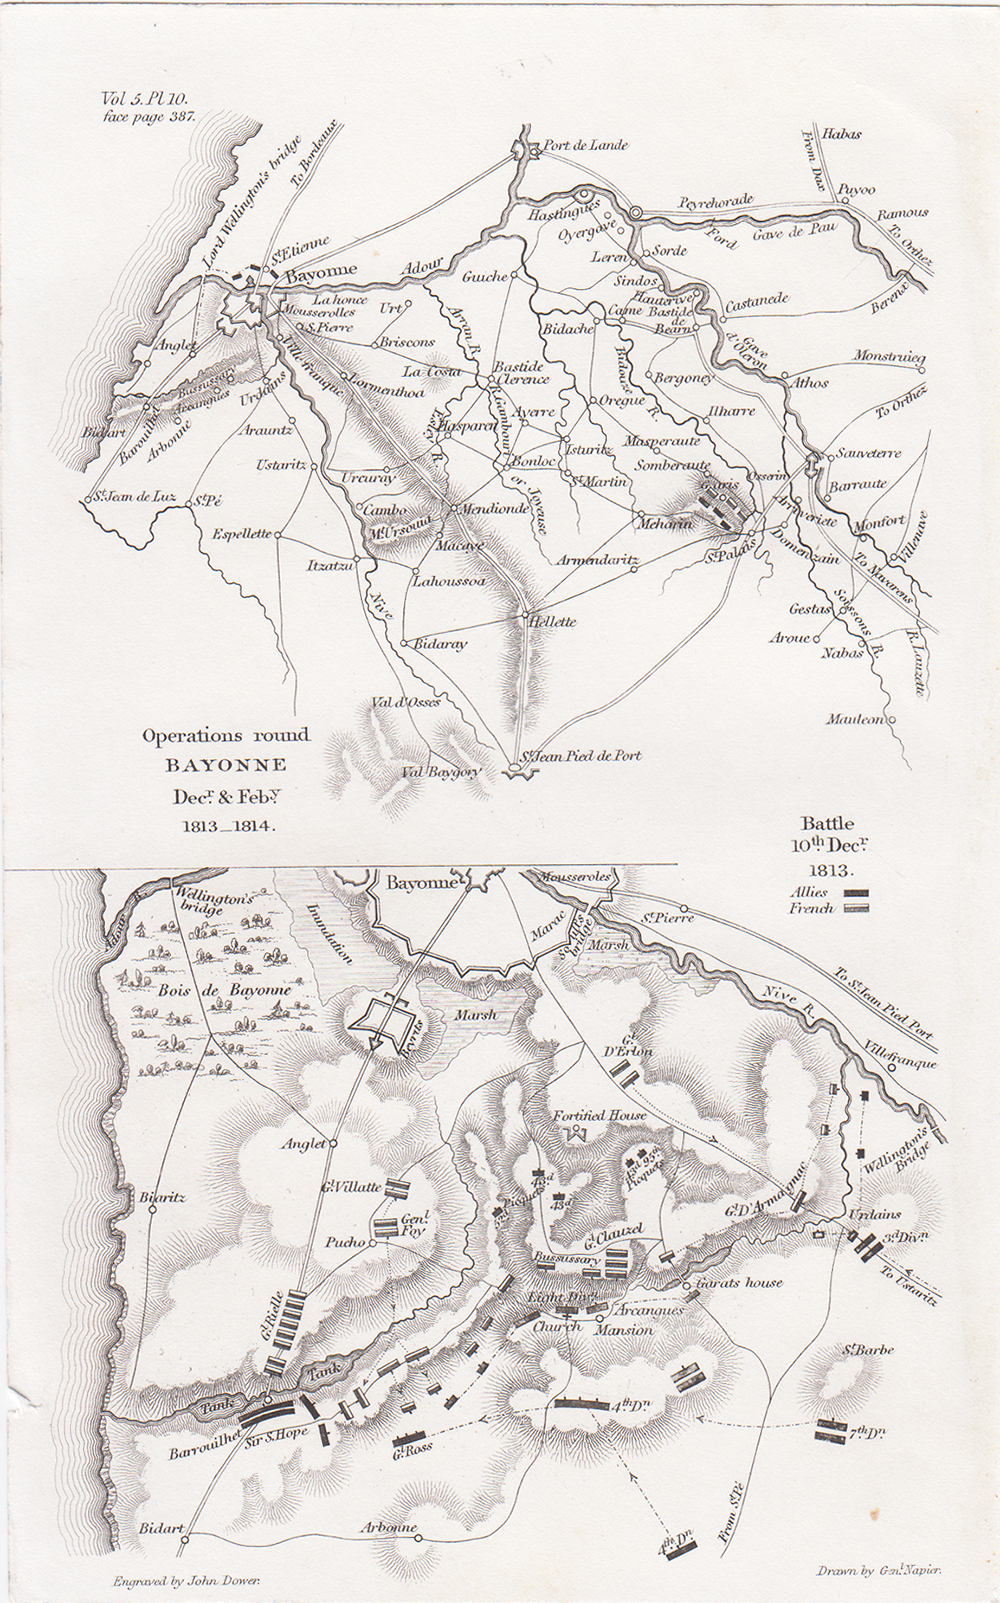 Operations round Bayonne De & Feb 1813-1814 and Battle 10th Dec 1813